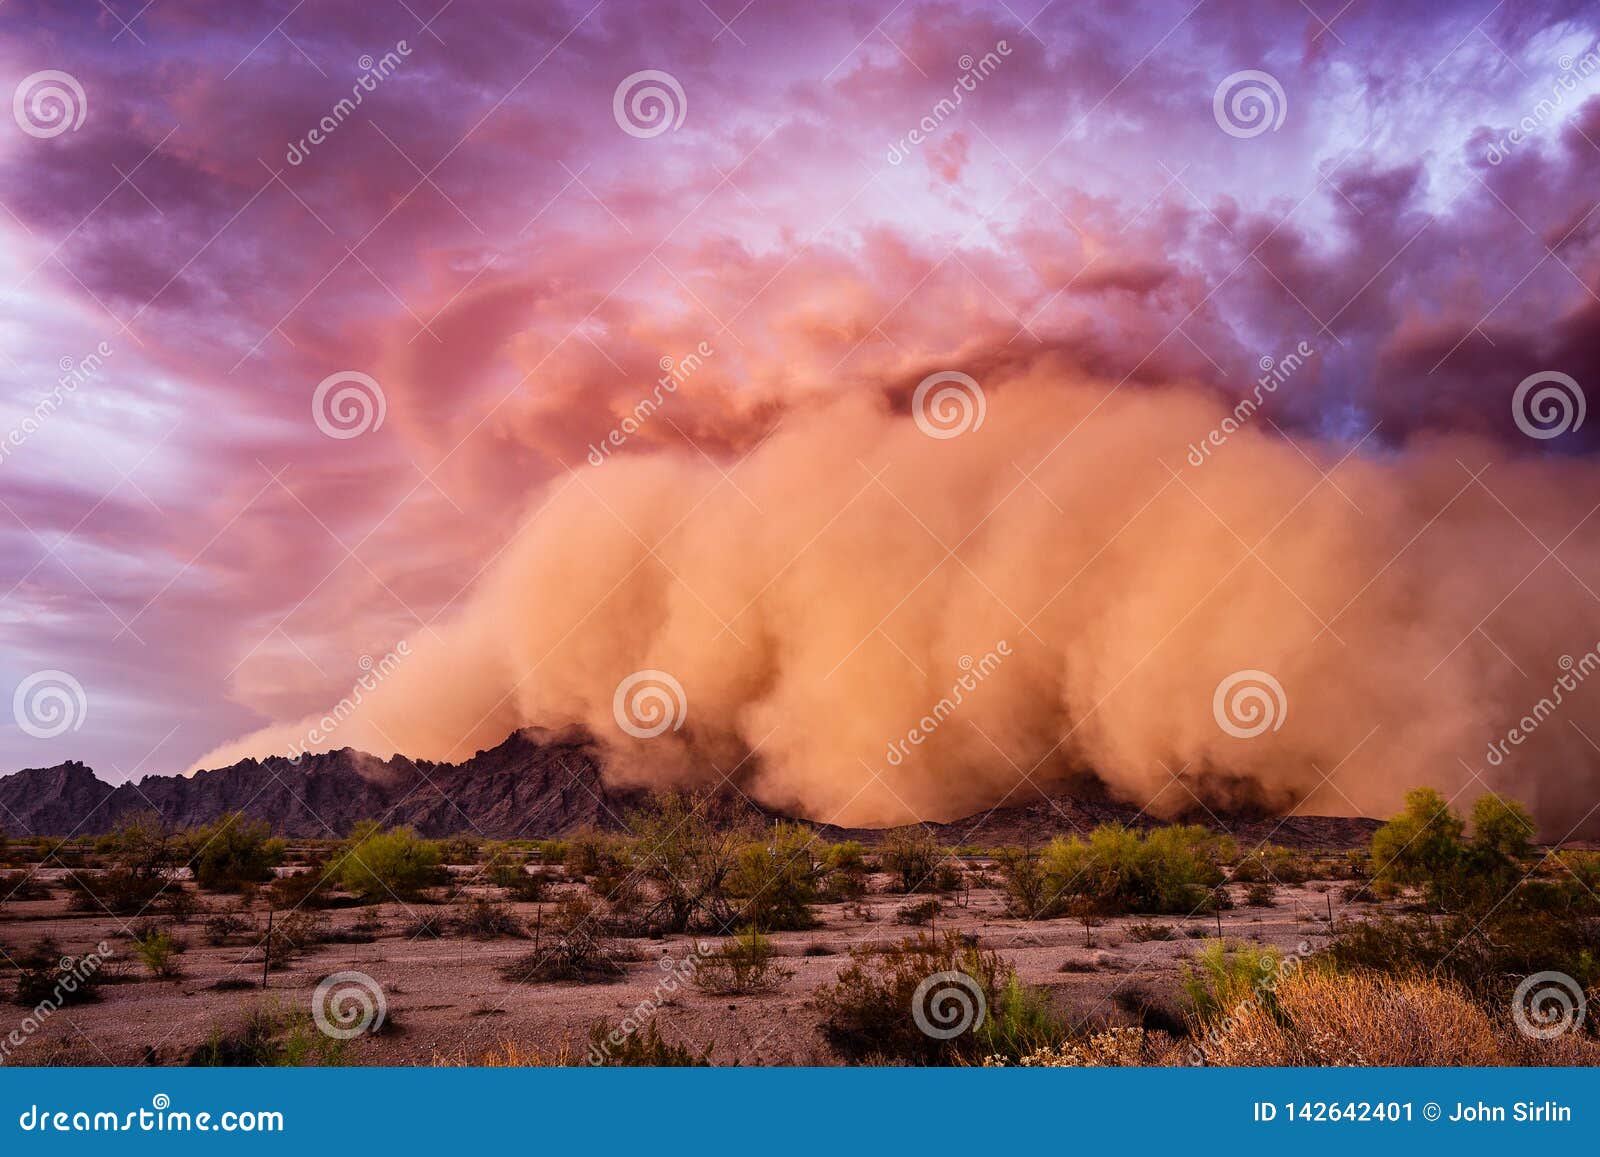 massive haboob dust storm in the desert